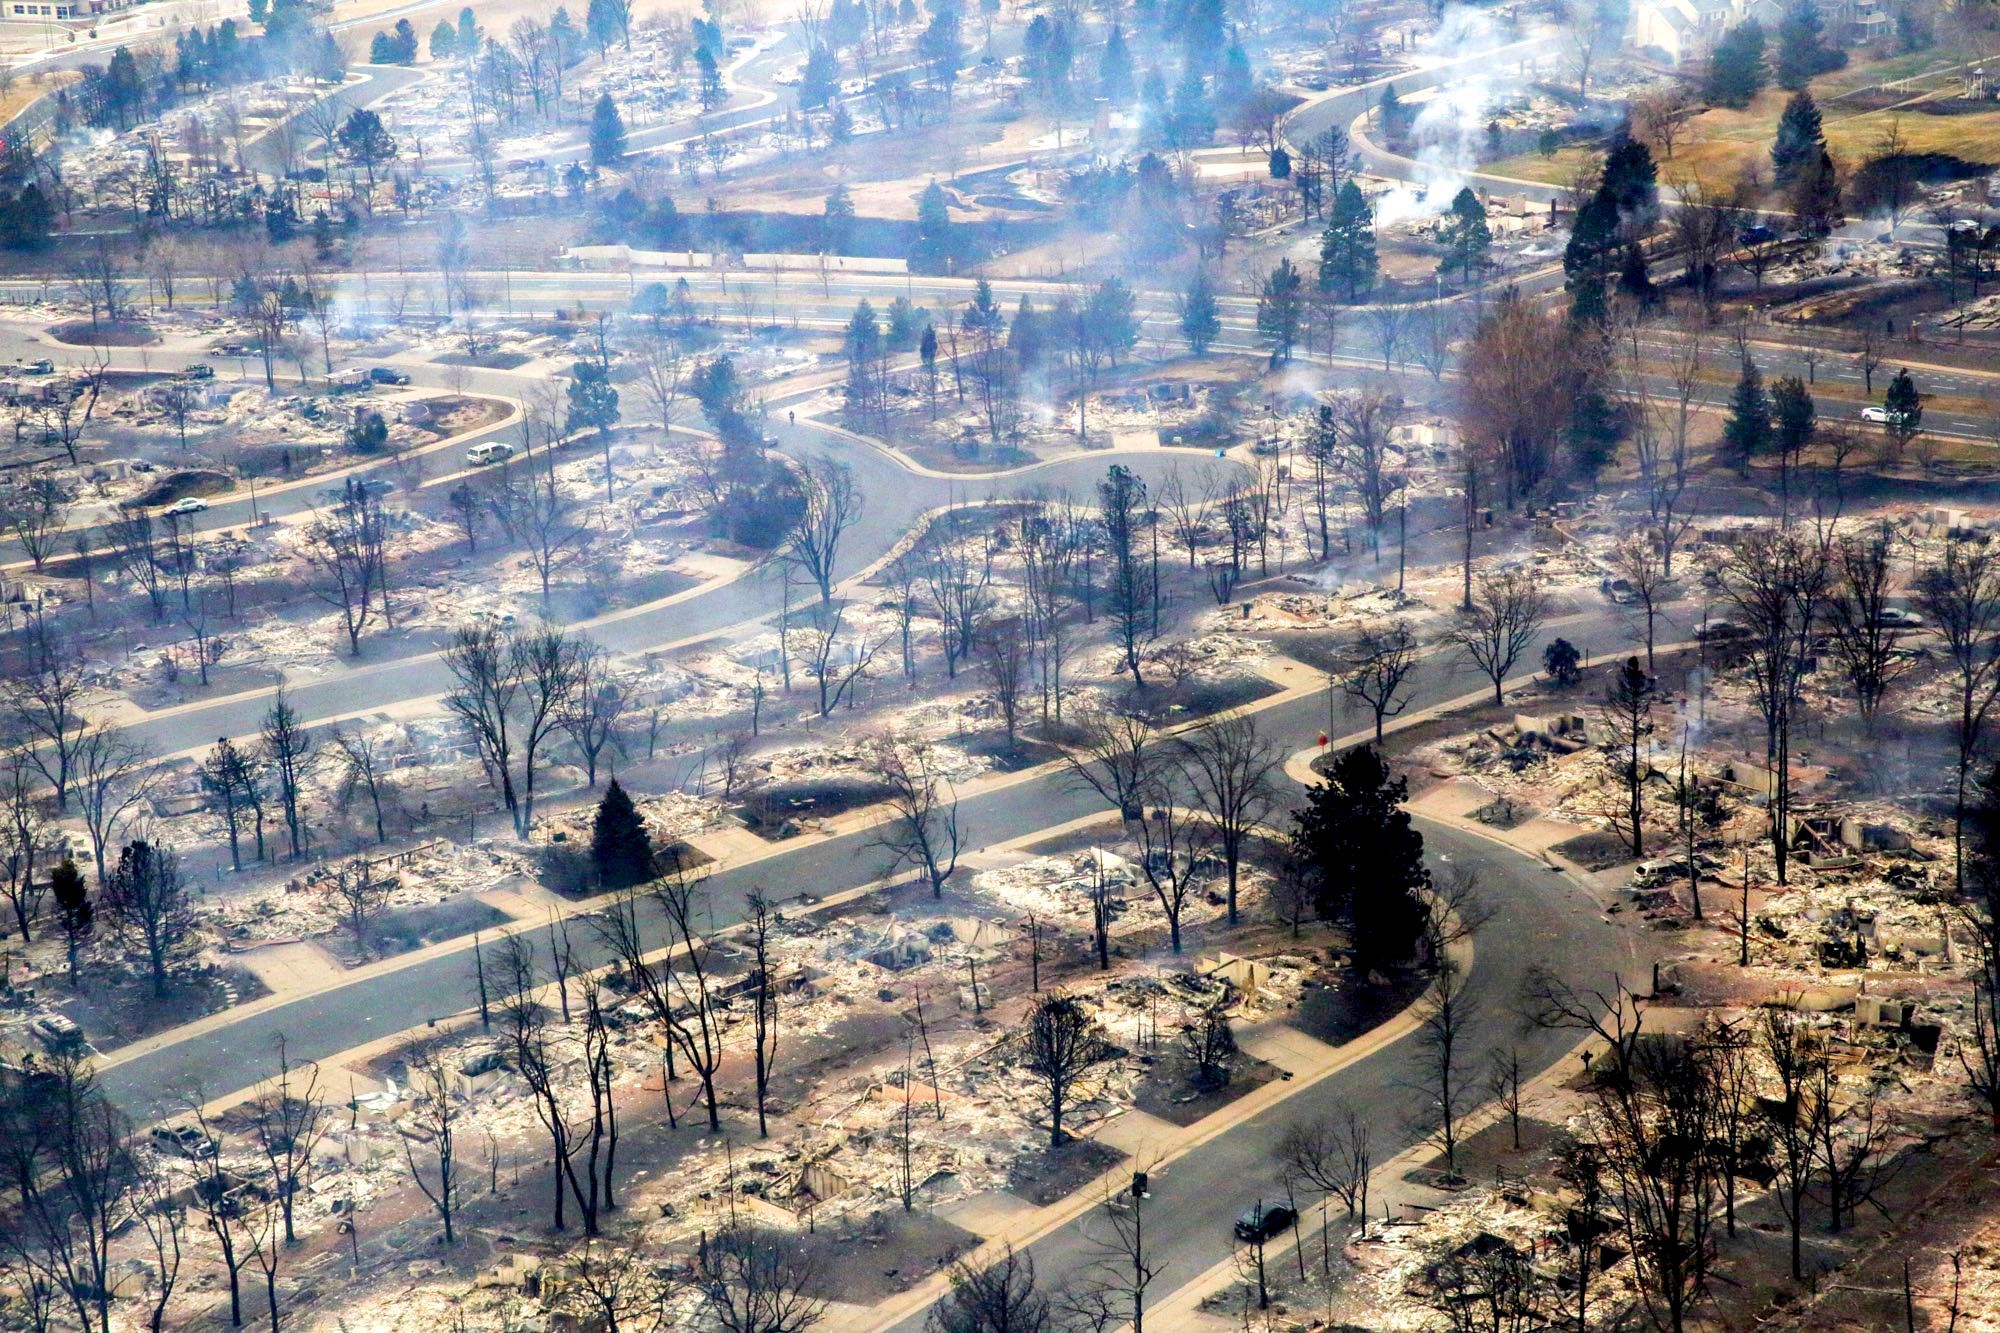 Colorado Saw the Return of the Urban Firestorm